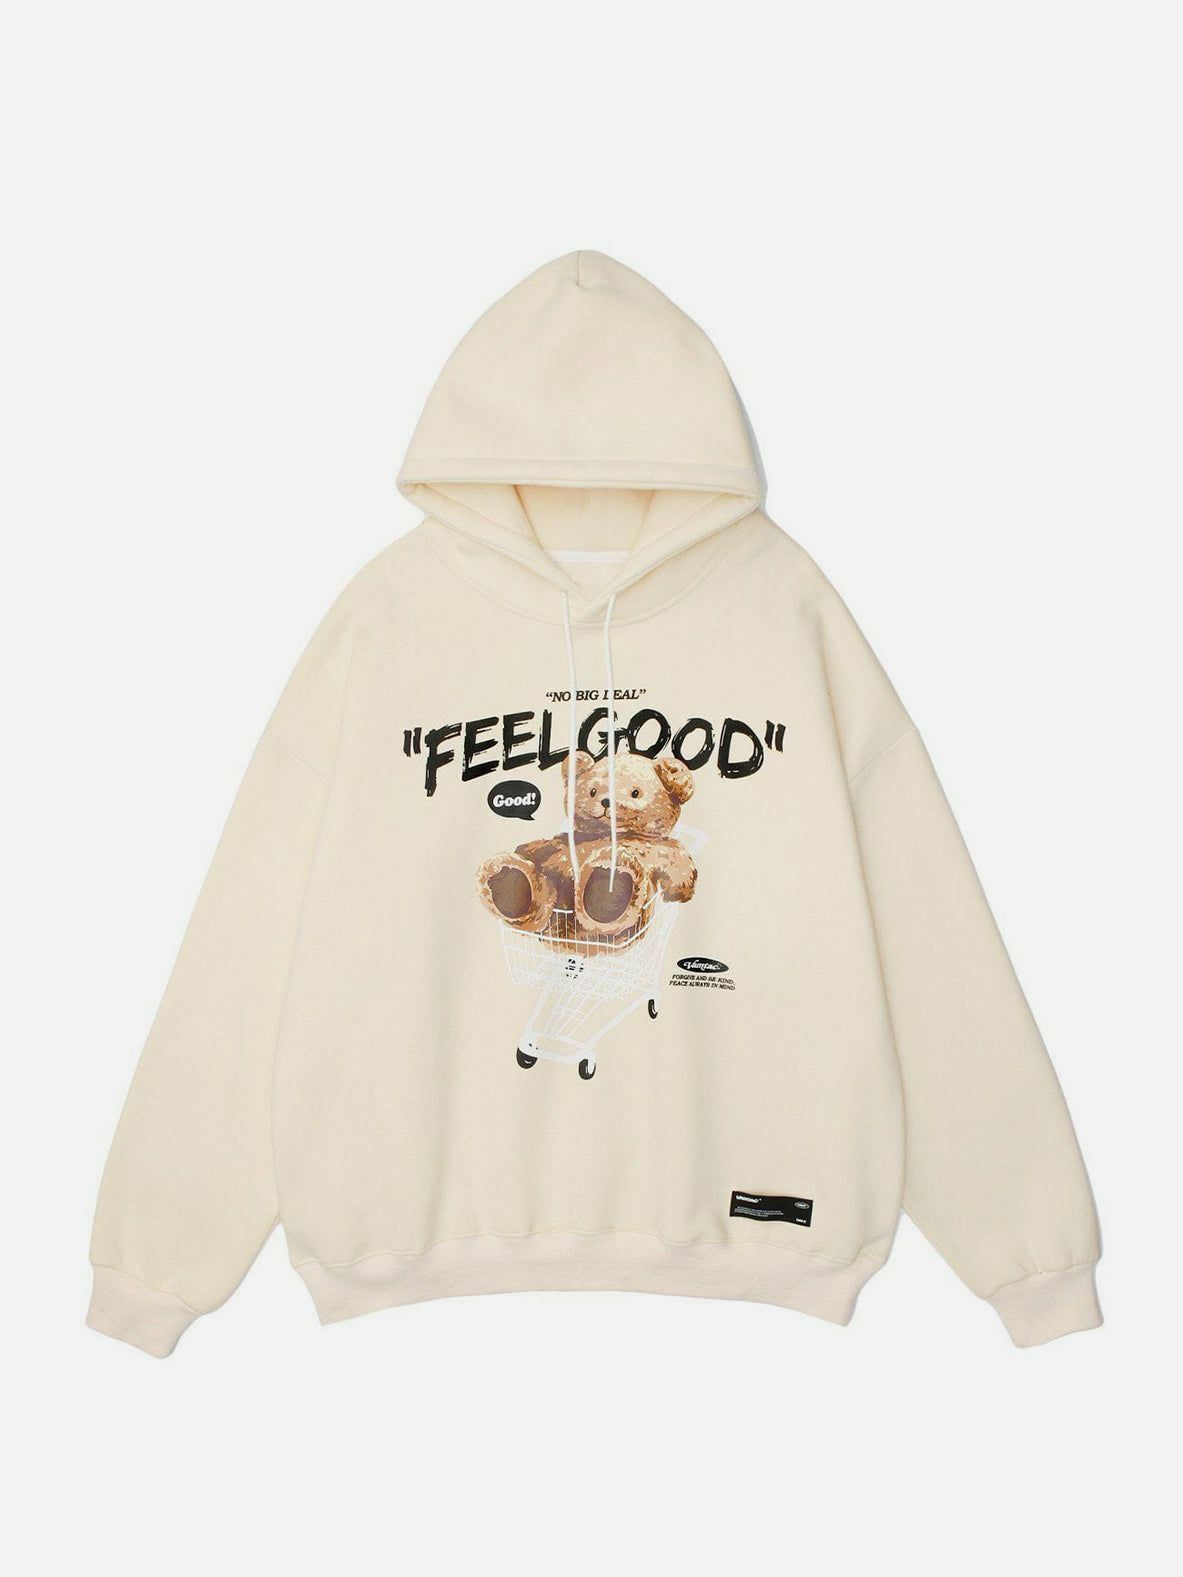 bear letter print hoodie edgy & vibrant streetwear 5849